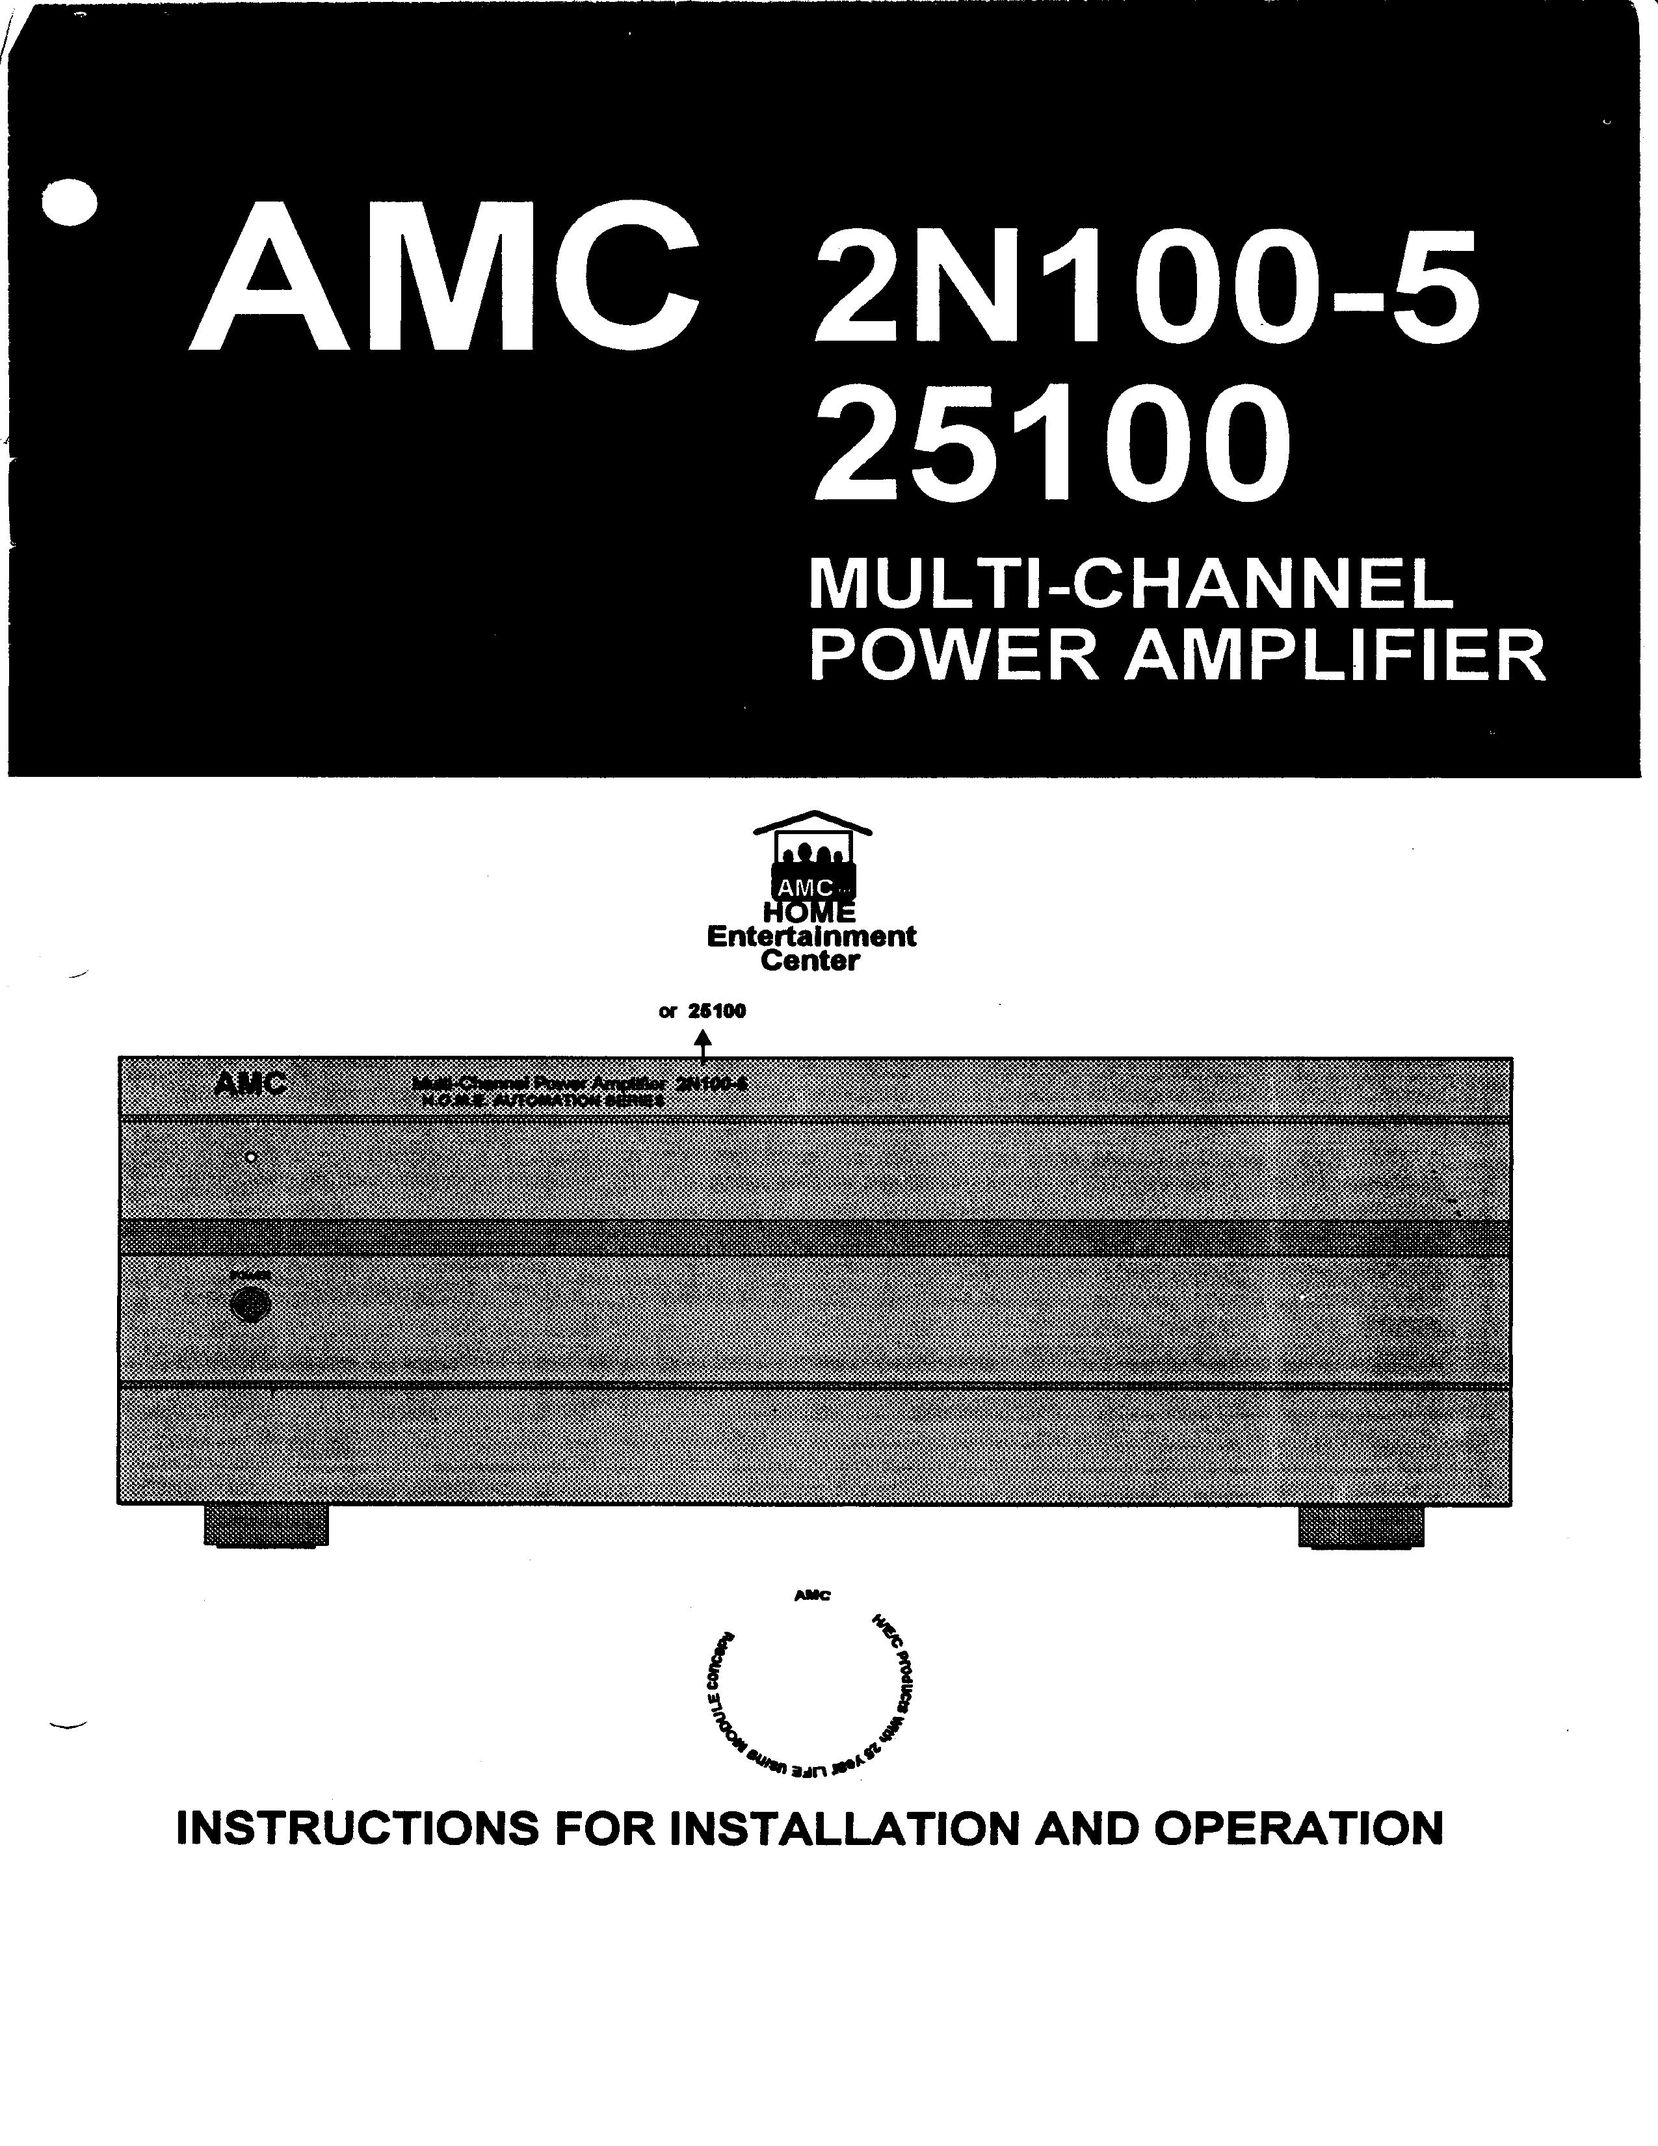 AMC 2N100-5 Stereo Amplifier User Manual